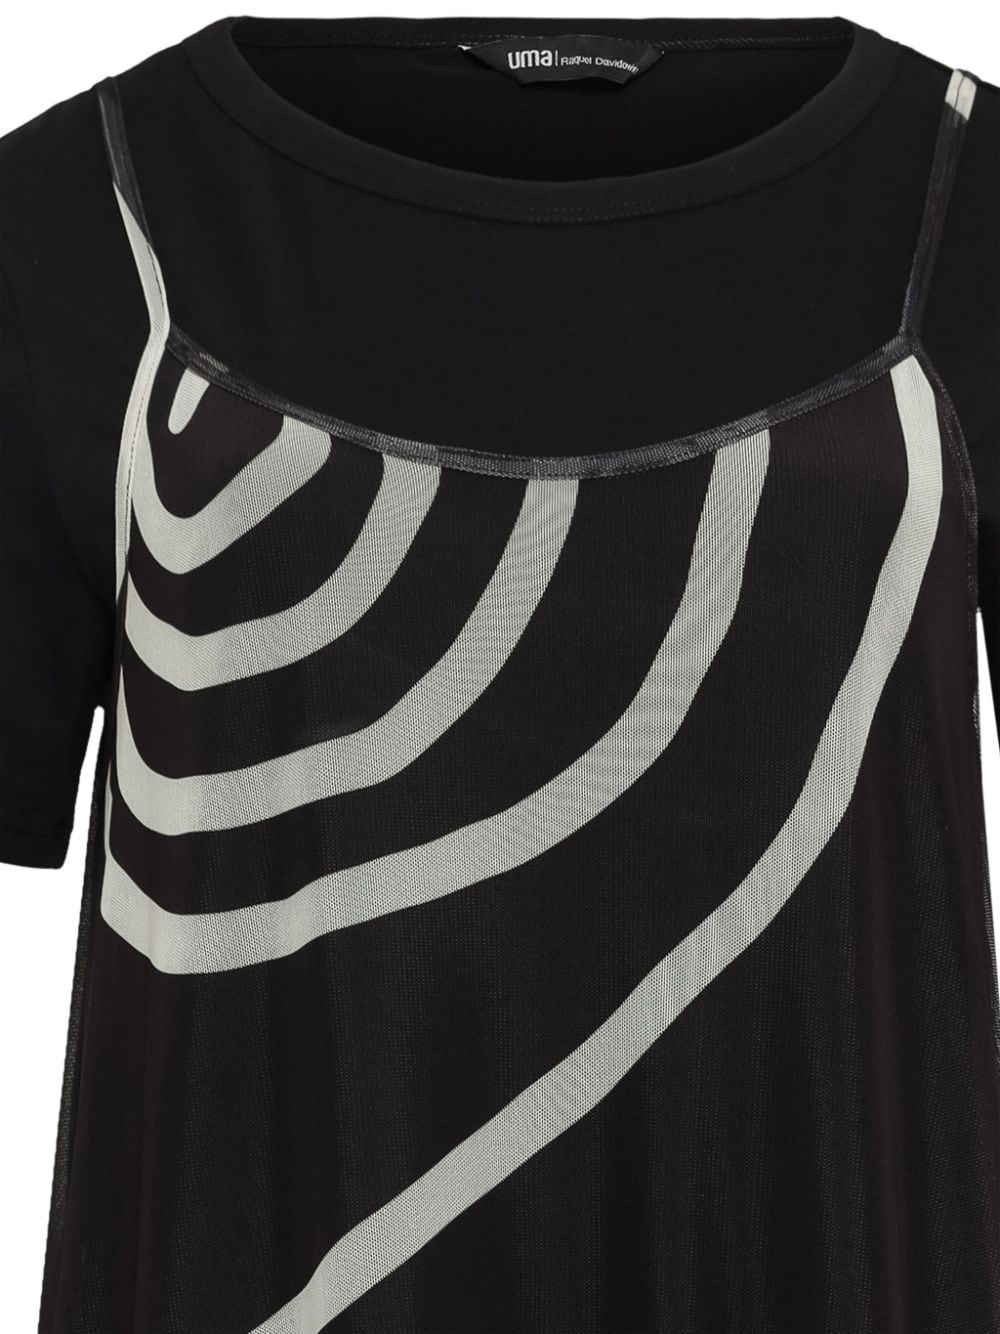 Uma | Raquel Davidowicz Mini-jurk met print Zwart